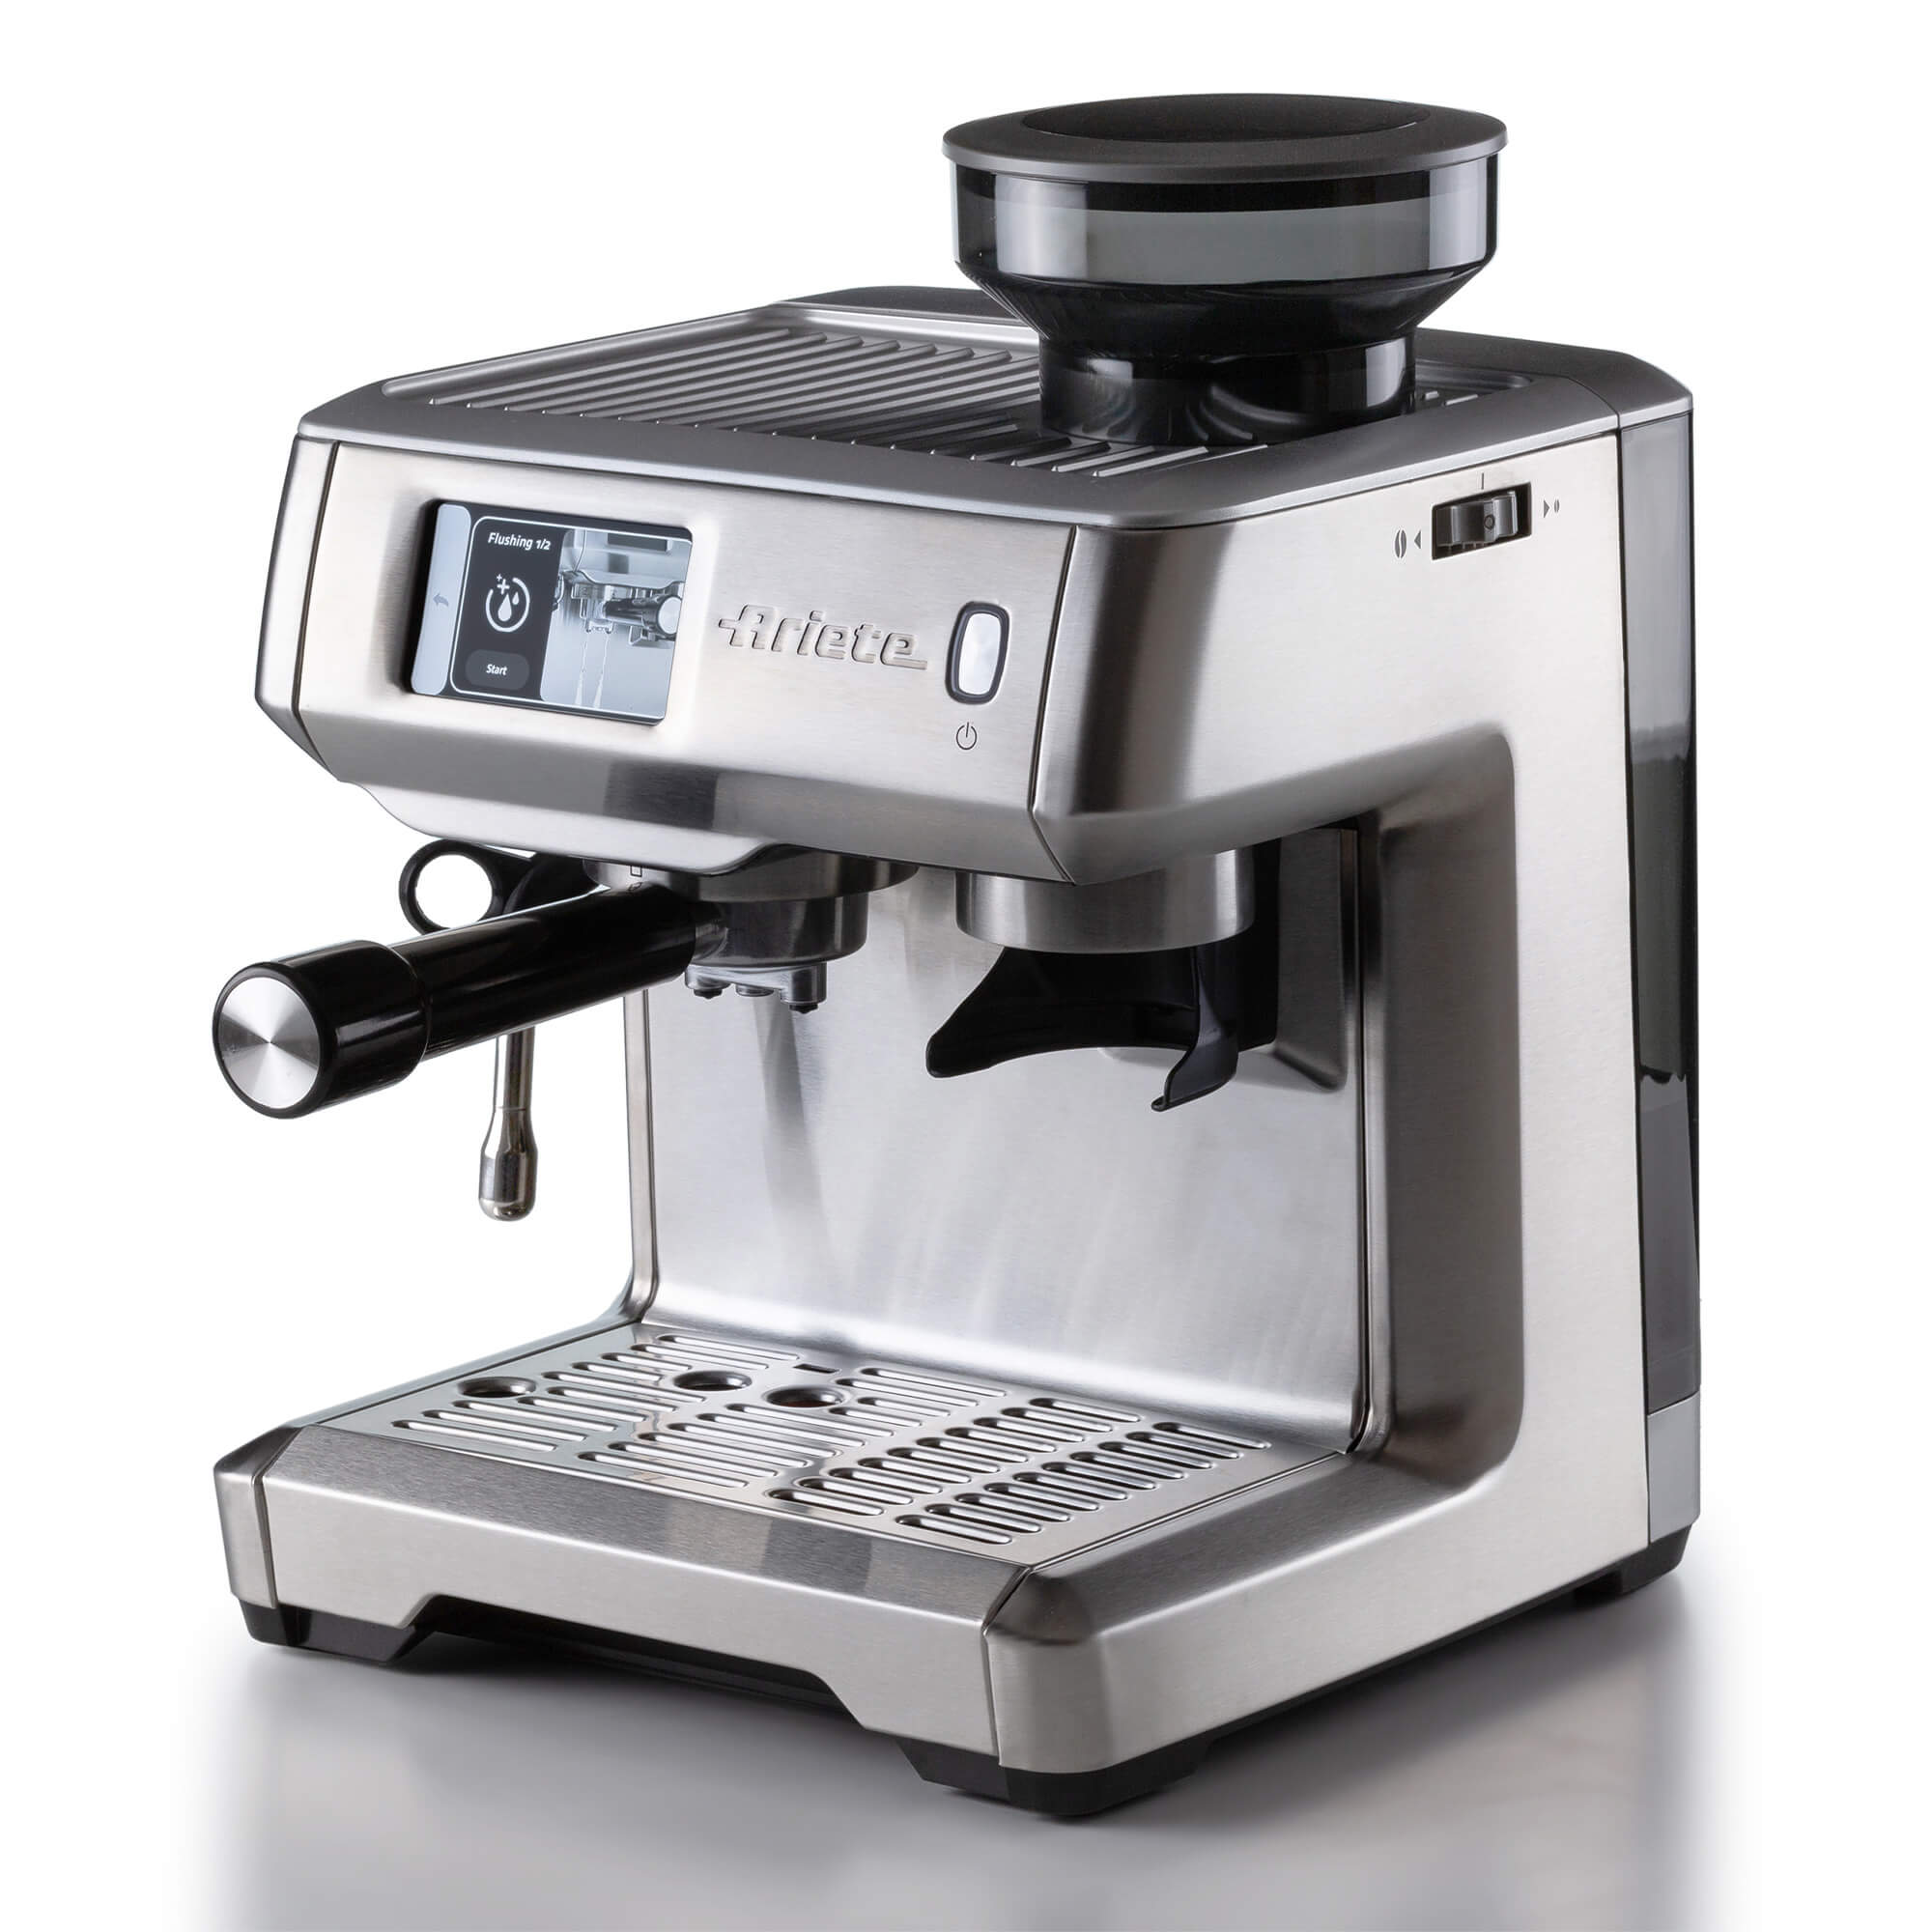 ESE Coffee Machine Silver, Coffee Makers ESE Pods, Espresso Coffee